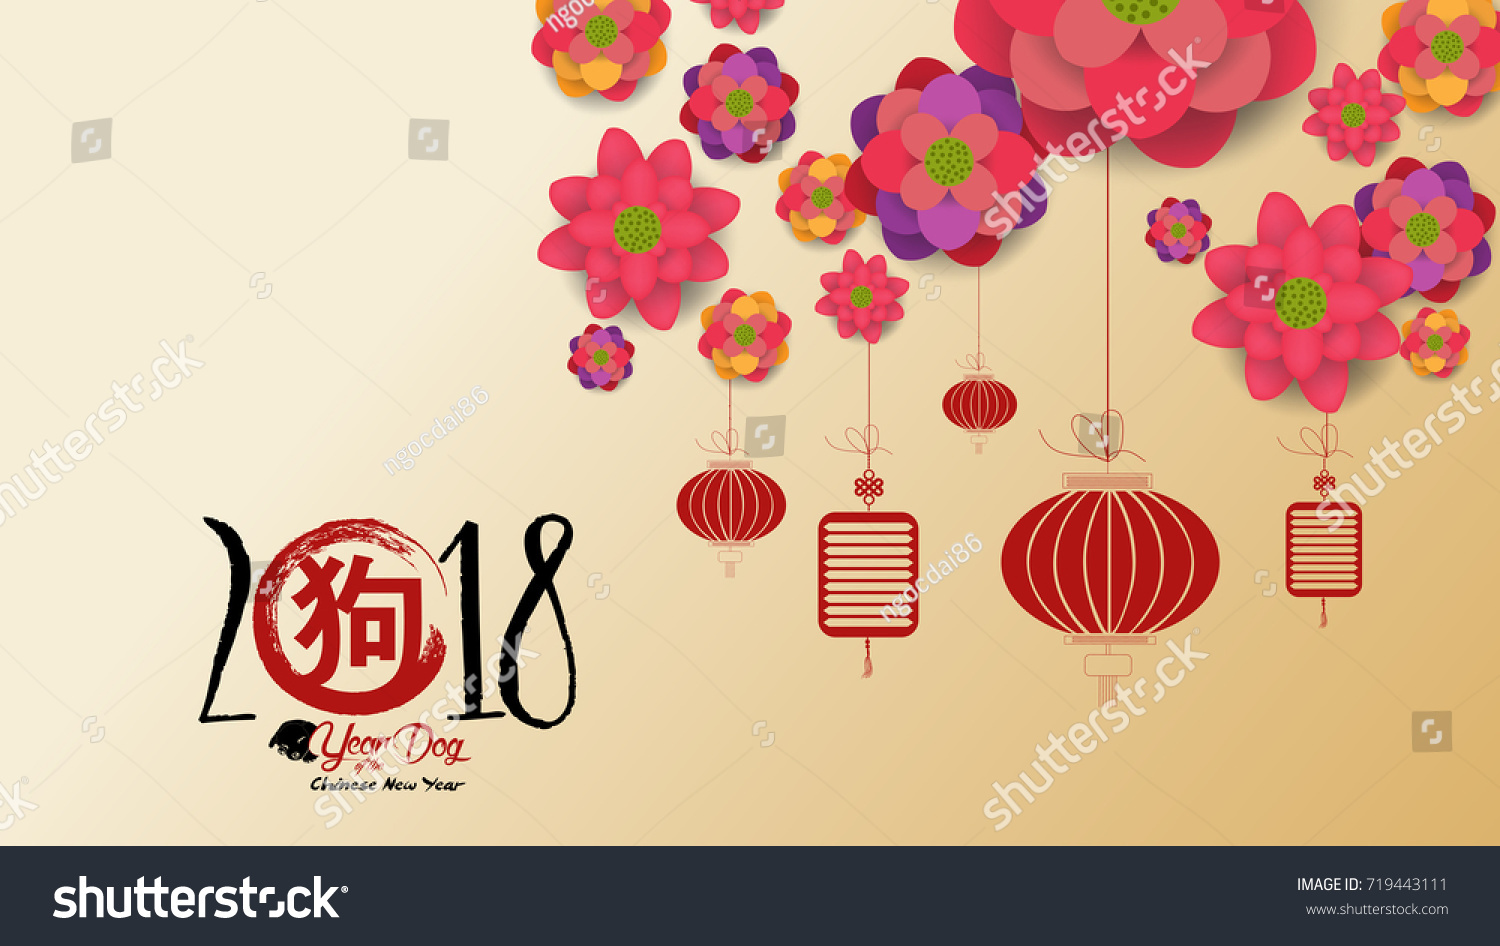 Download 98+ Lunar New Year Wallpapers on WallpaperSafari